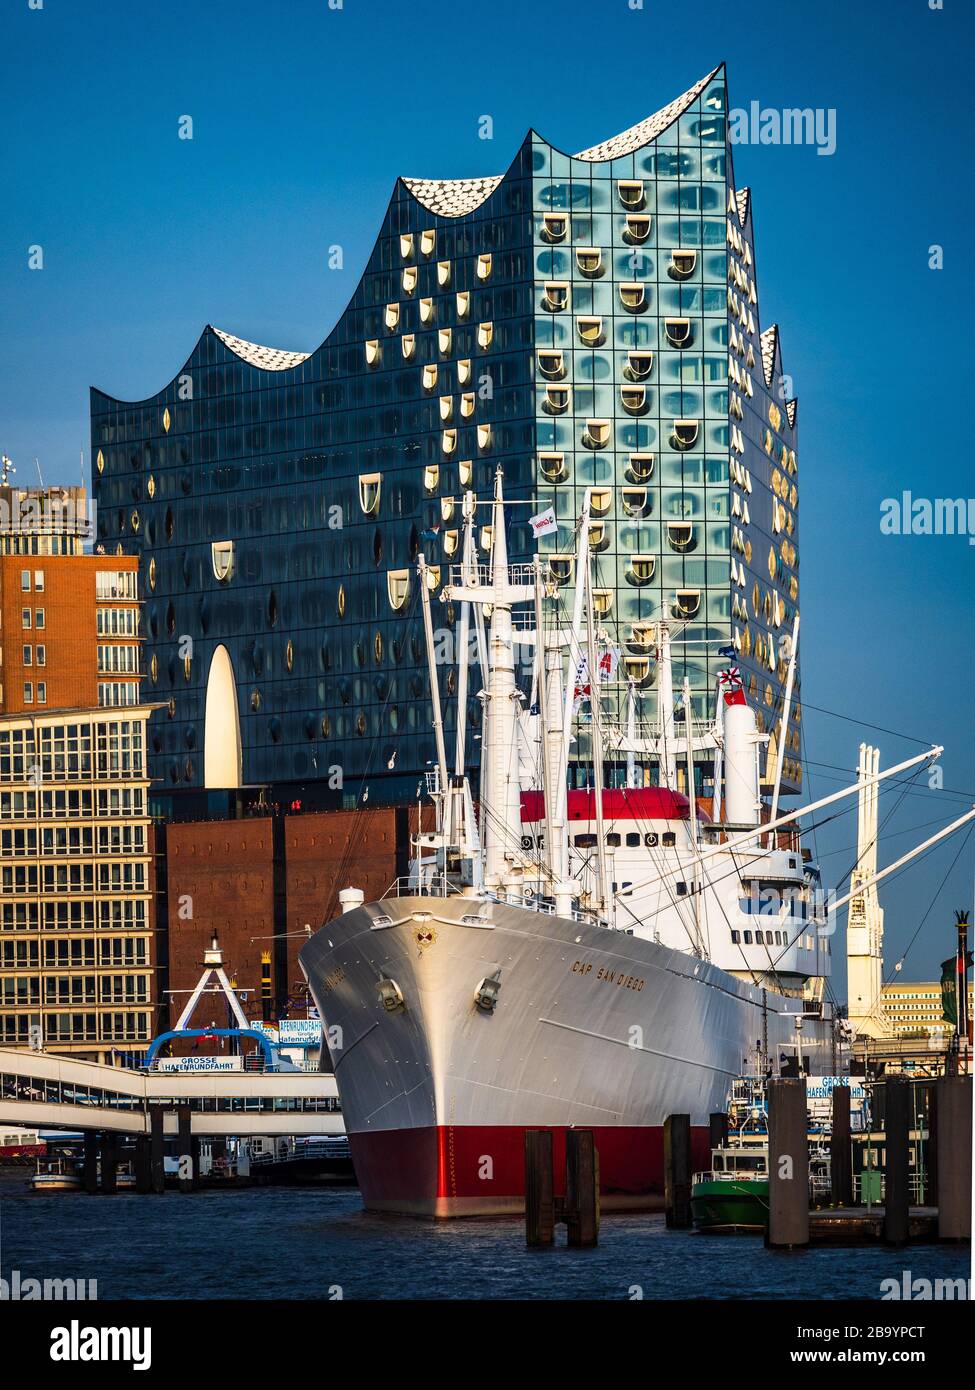 Elbphilharmonie  Hamburg - Elbe Philharmonic Hall - Elbi - Hamburg Concert Hall  - architect Herzog & De Meuron - 2017. MS Cap San Diego Historic Ship. Stock Photo